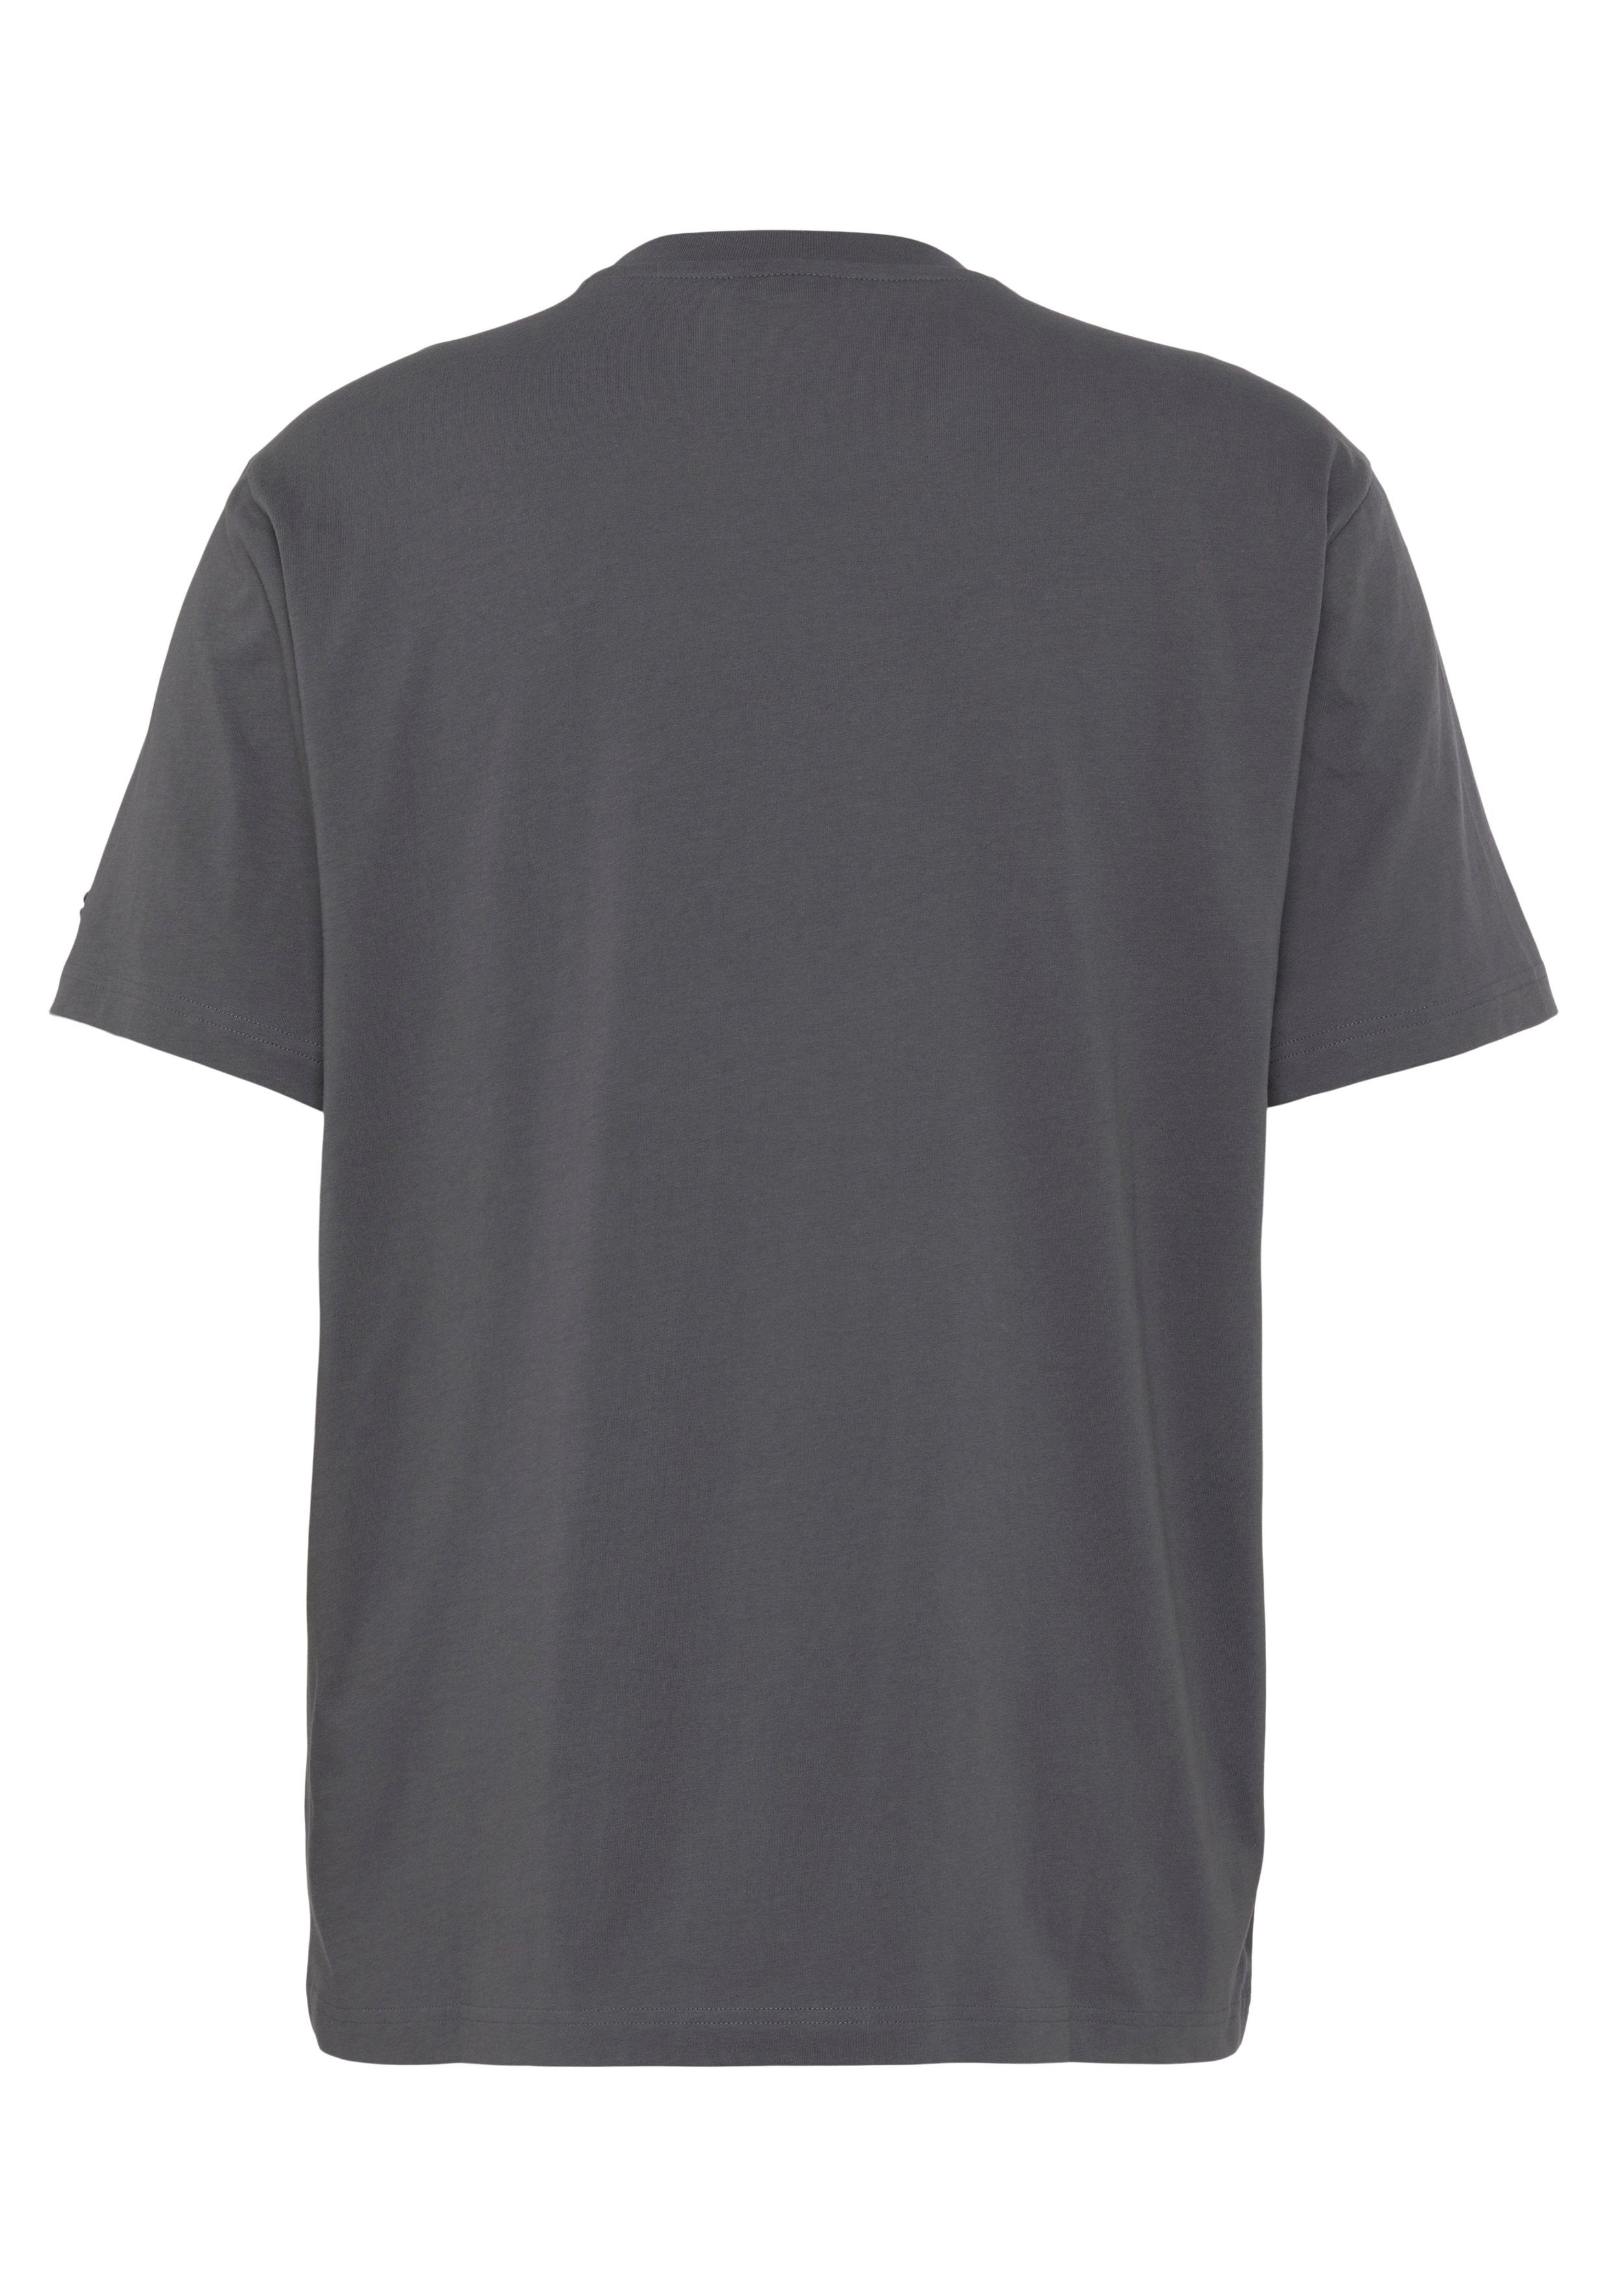 Crewneck grau T-Shirt small T-Shirt Classic Champion logo